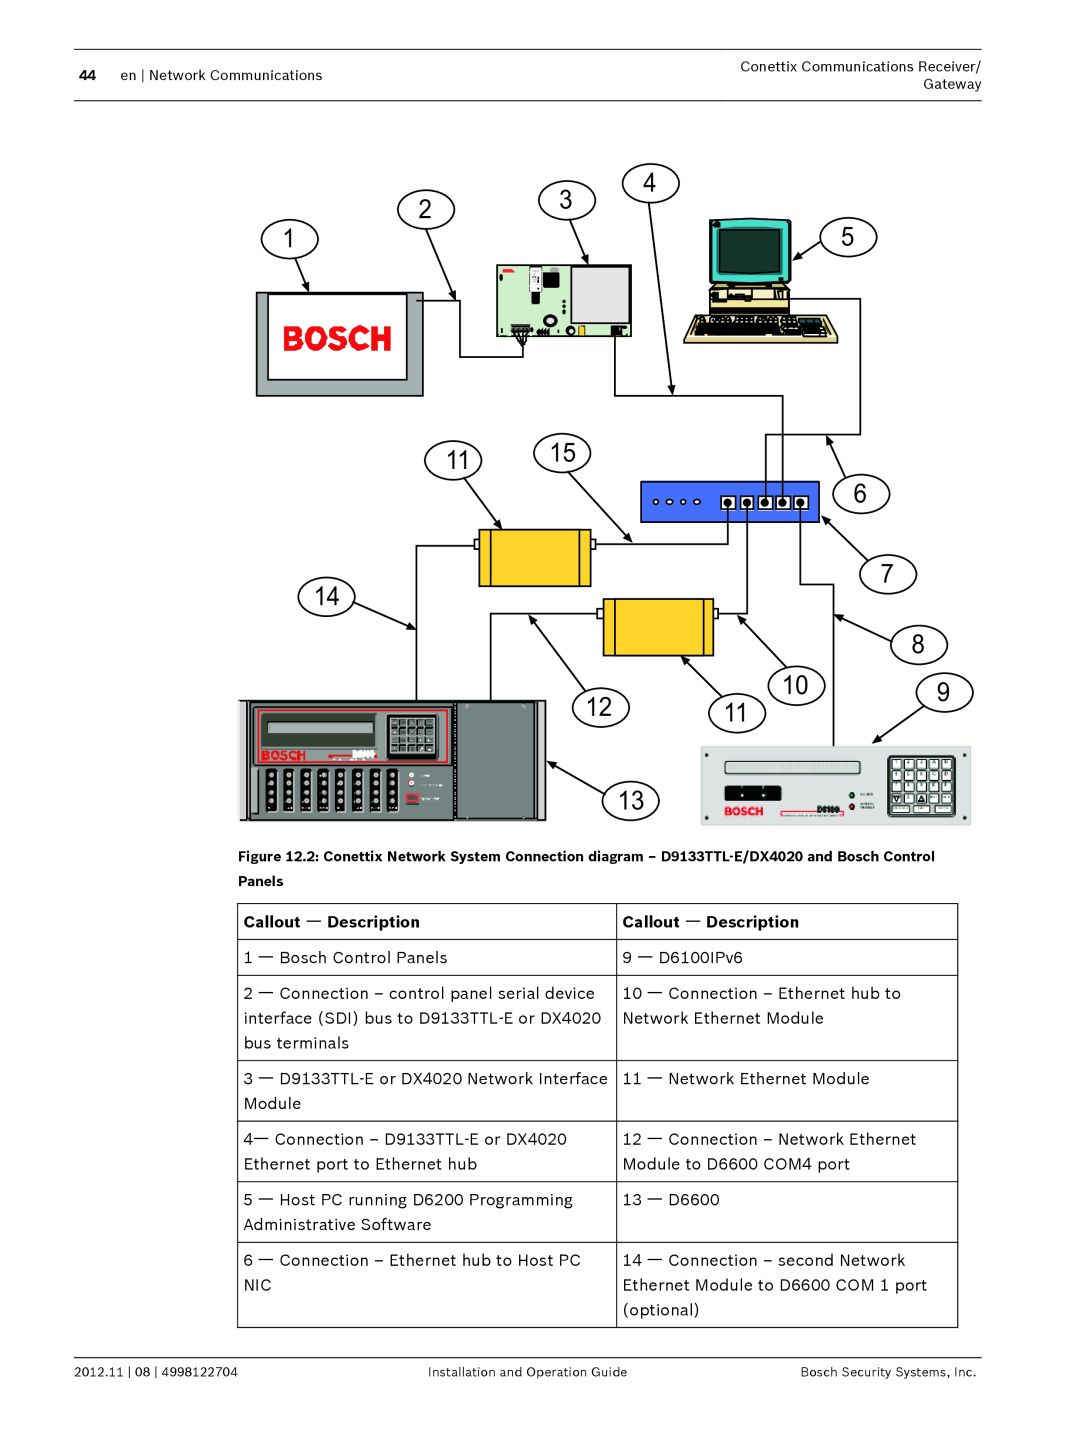 Bosch Appliances D6600 installation and operation guide Callout ᅳ Description, ᅳ Bosch Control Panels 